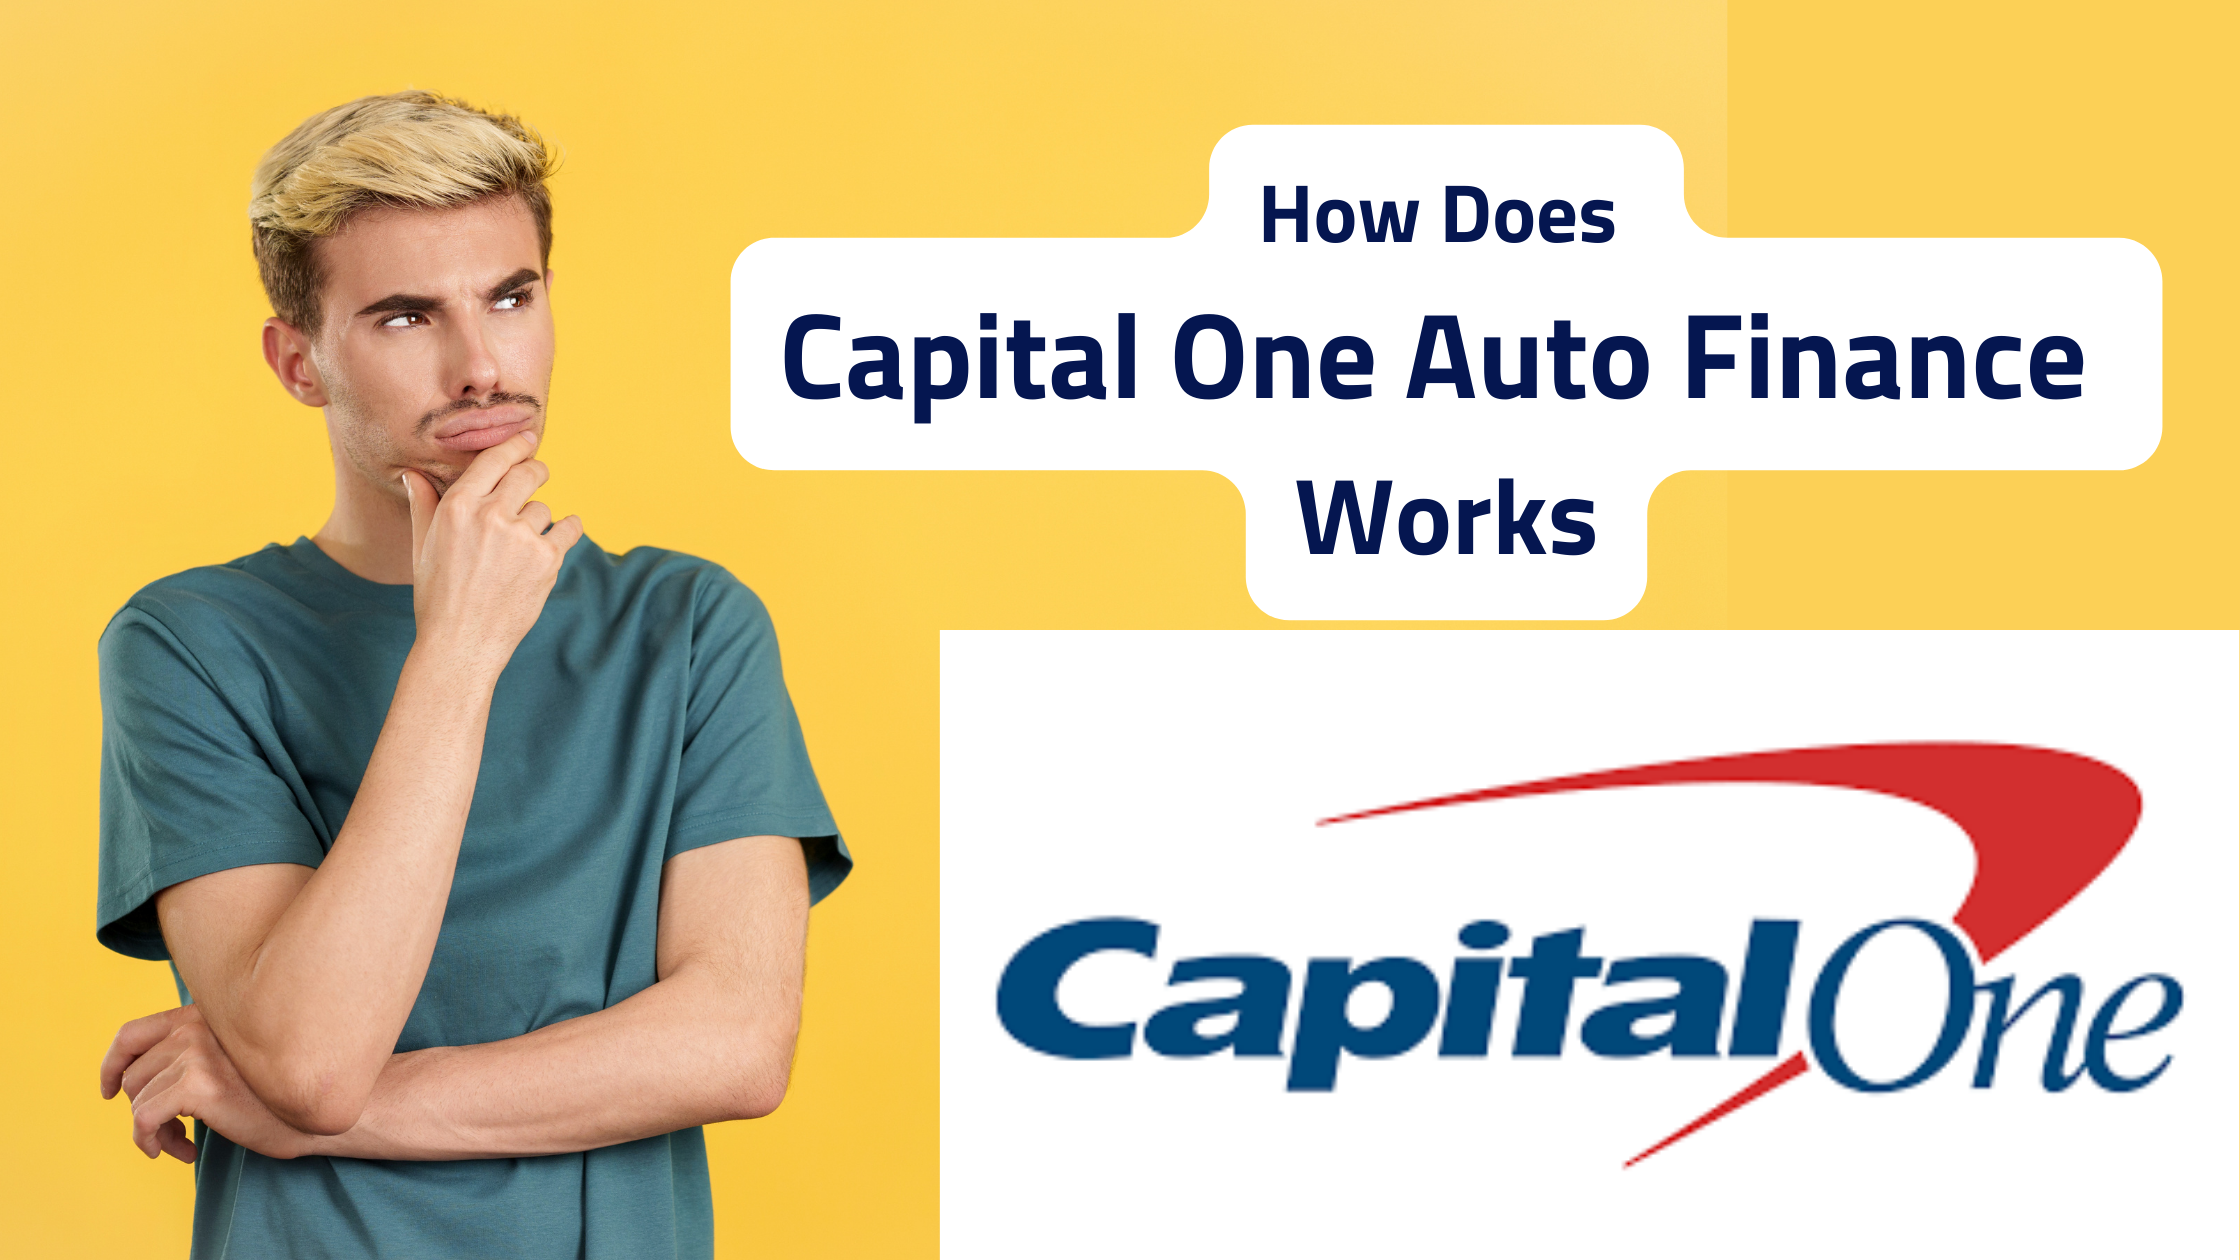 How Does Capital One Auto Finance Work